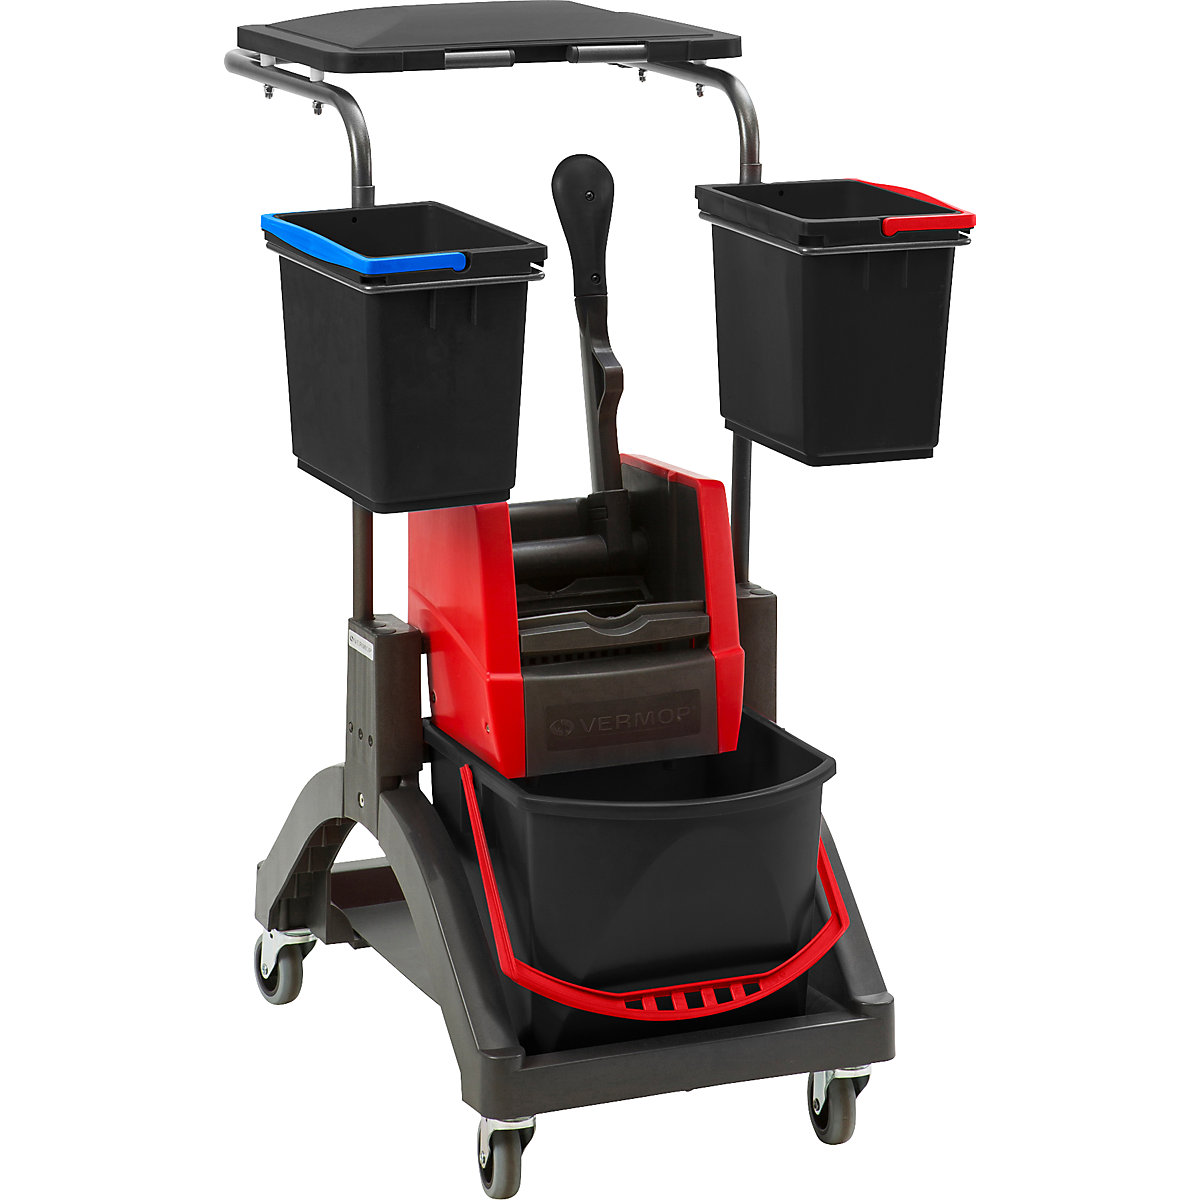 Úklidový vozík MISTRAL – Vermop